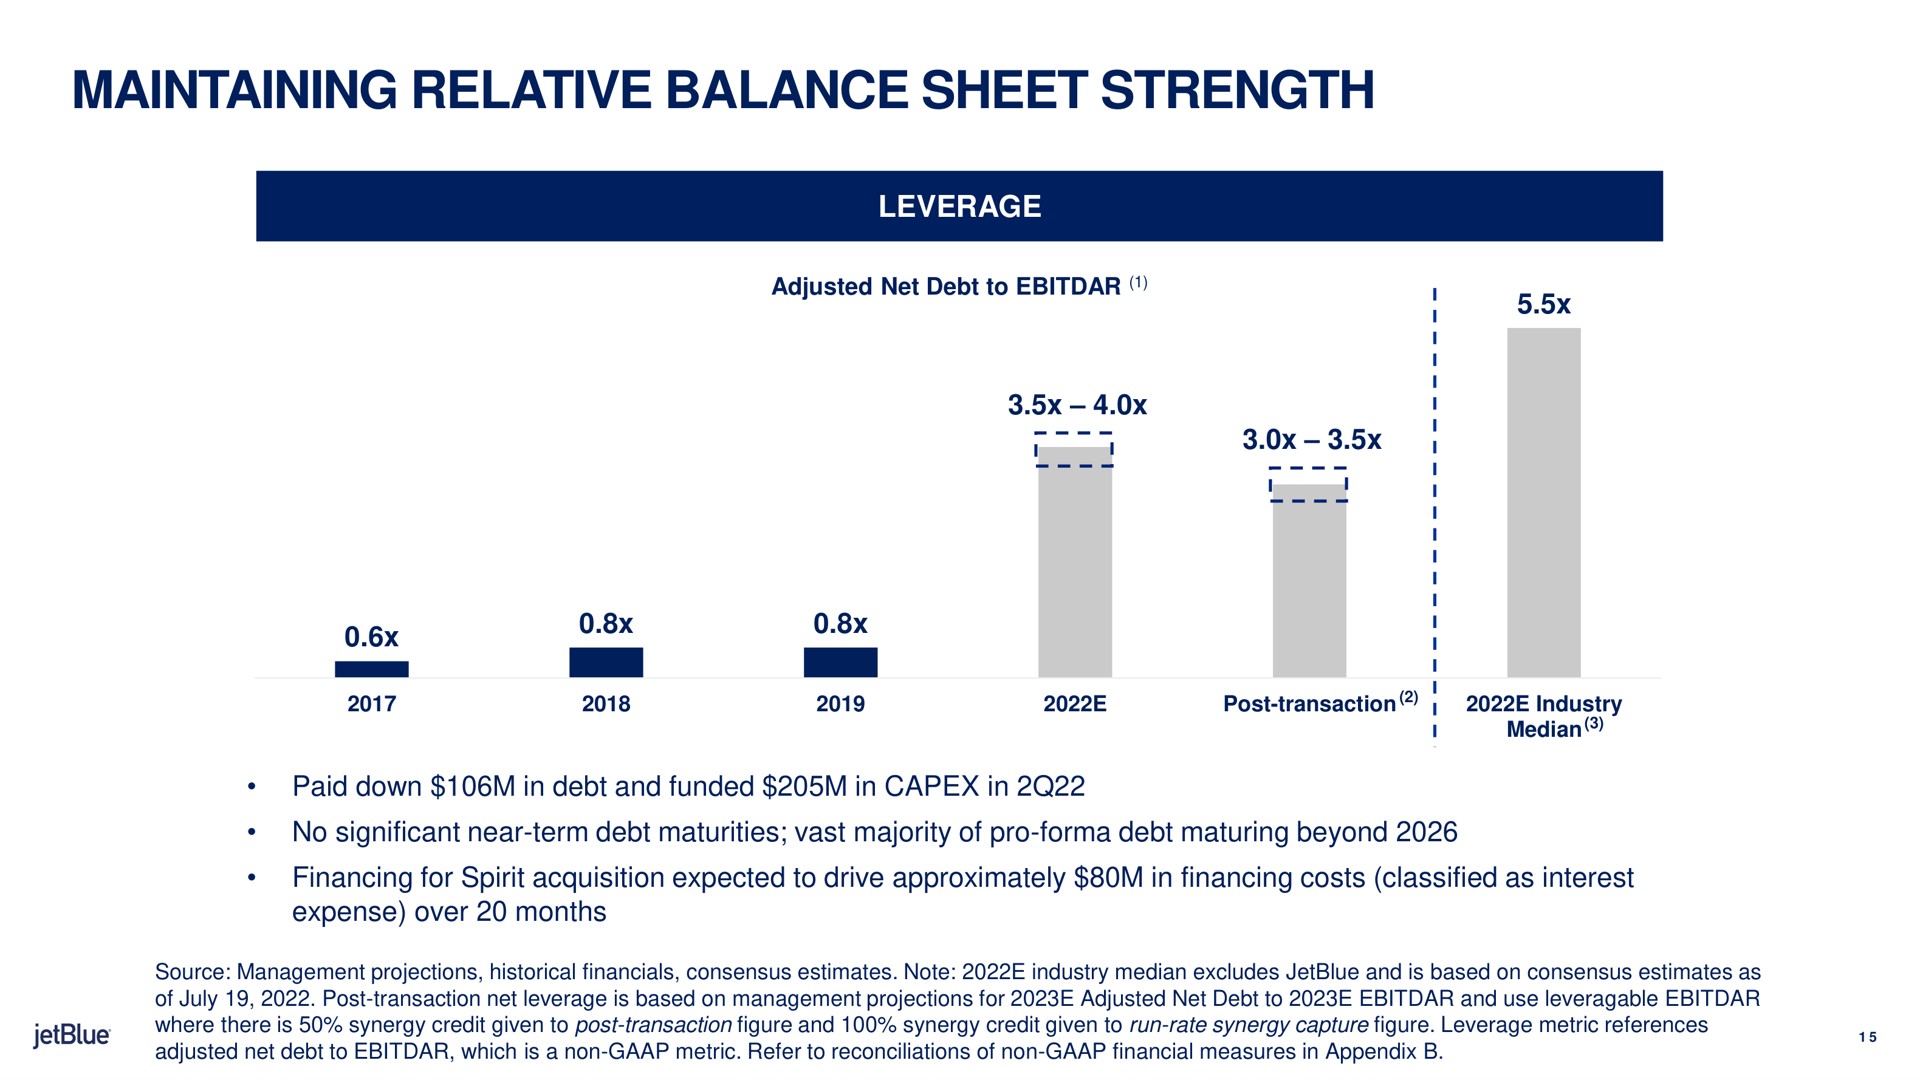 maintaining relative balance sheet strength | jetBlue